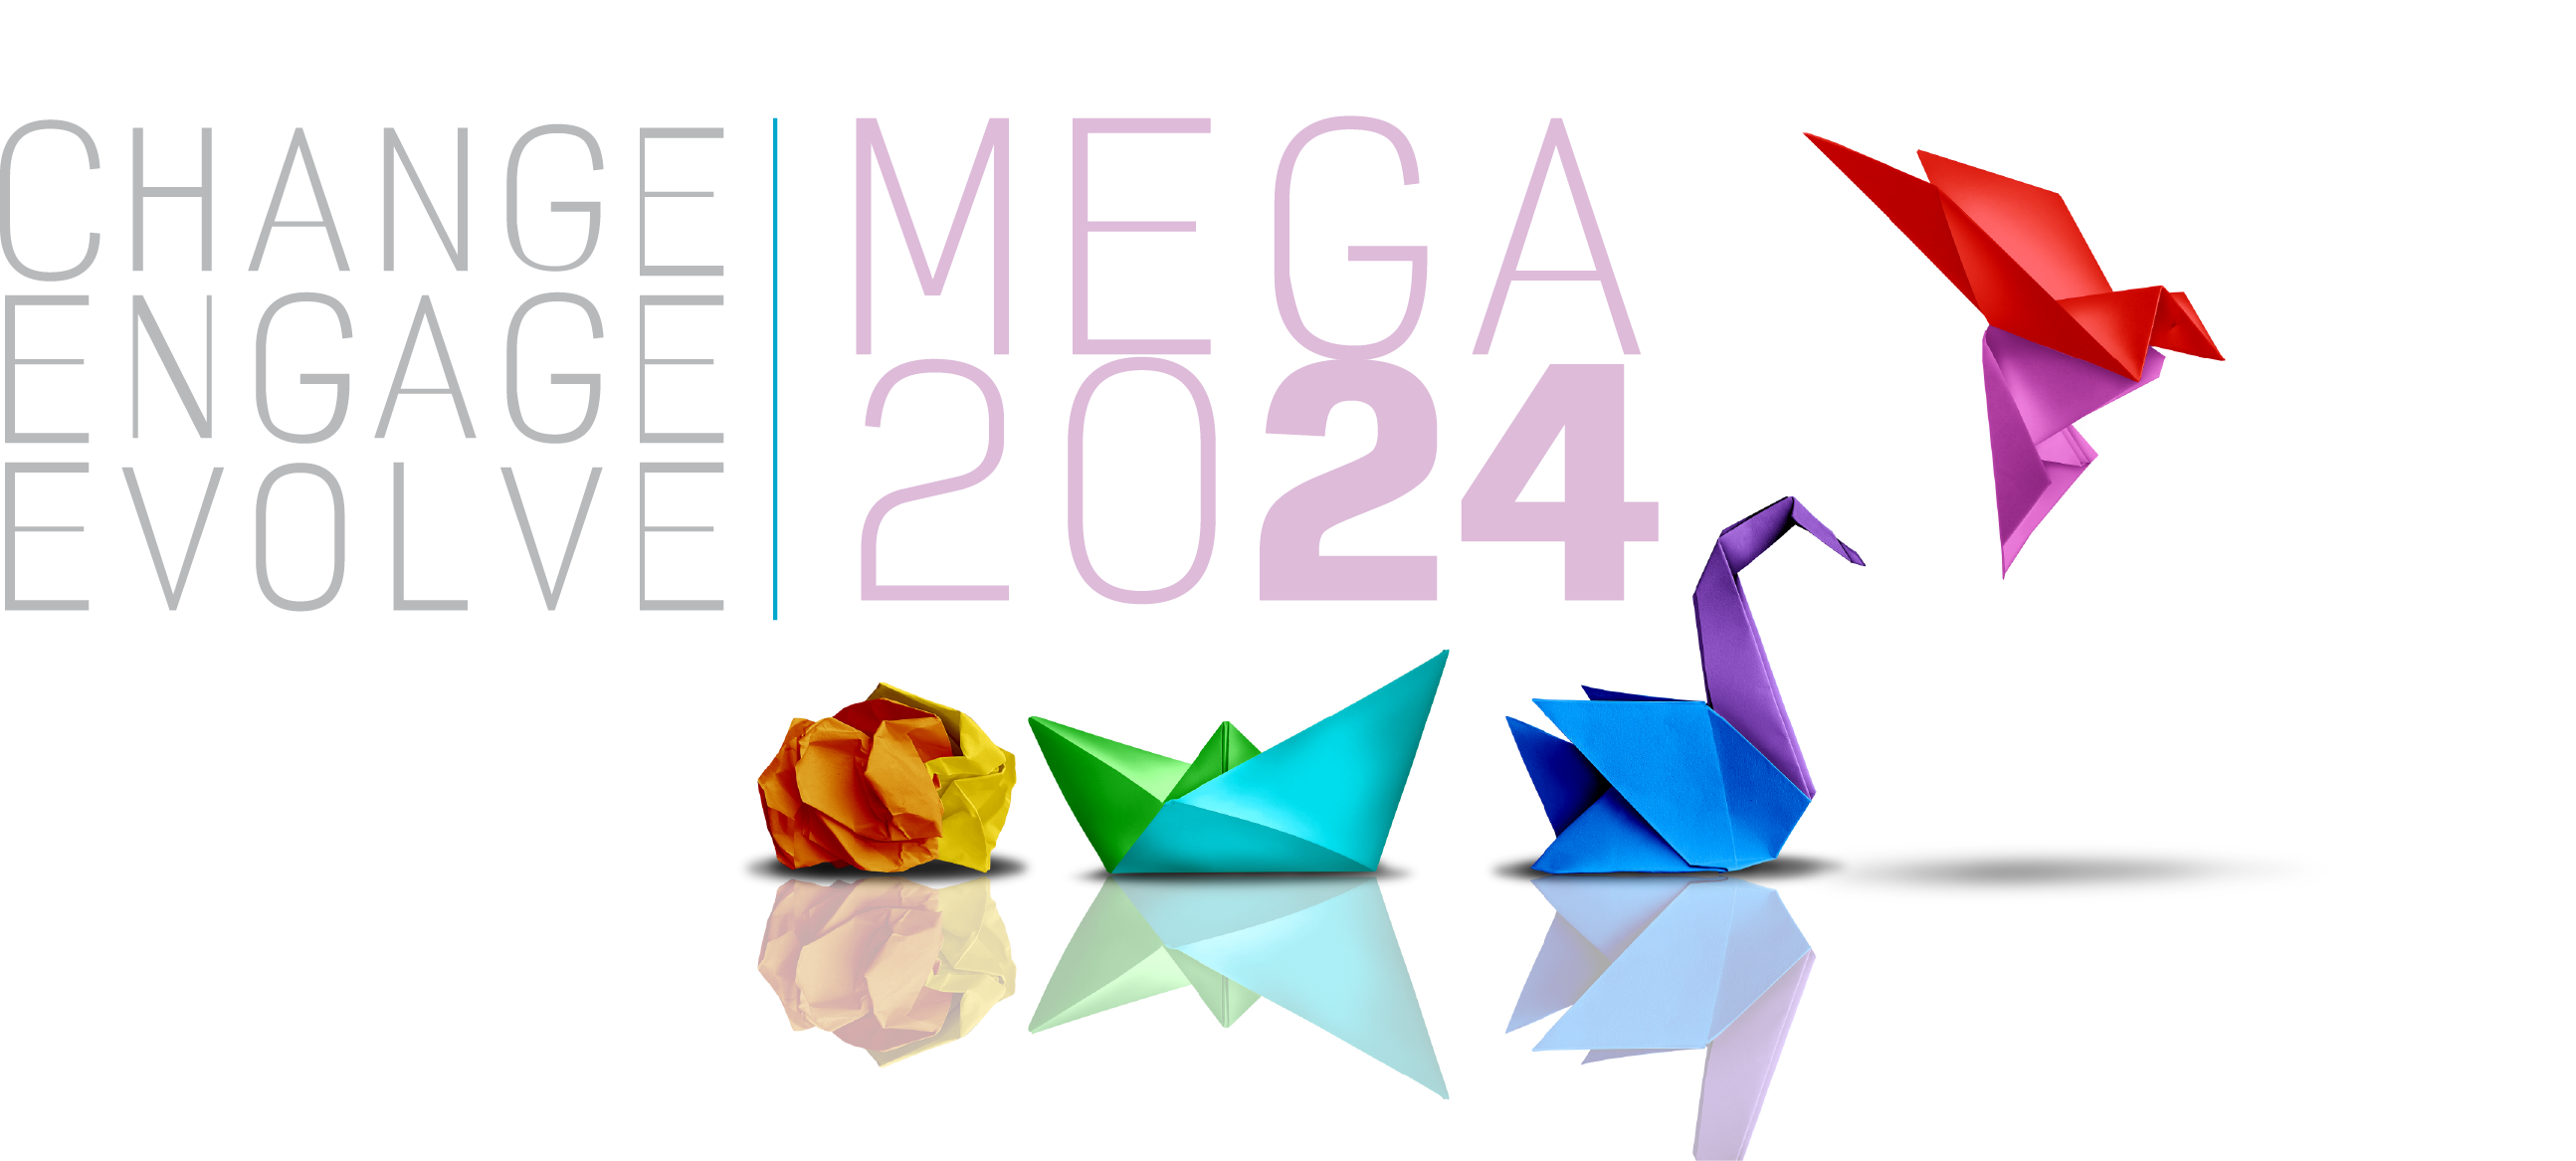 Mega Conference Vendor Opportunities